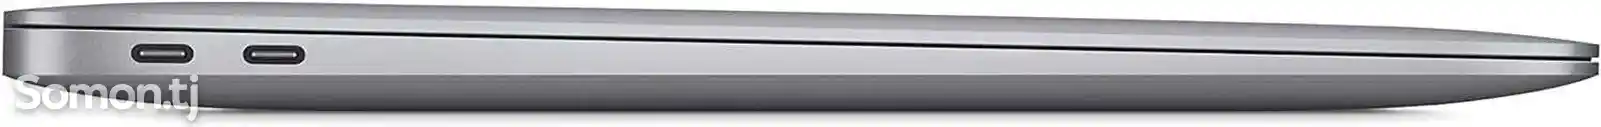 Ноутбук Apple 2020 MacBook Air Laptop M1 Chip, 13 Retina Displ-4